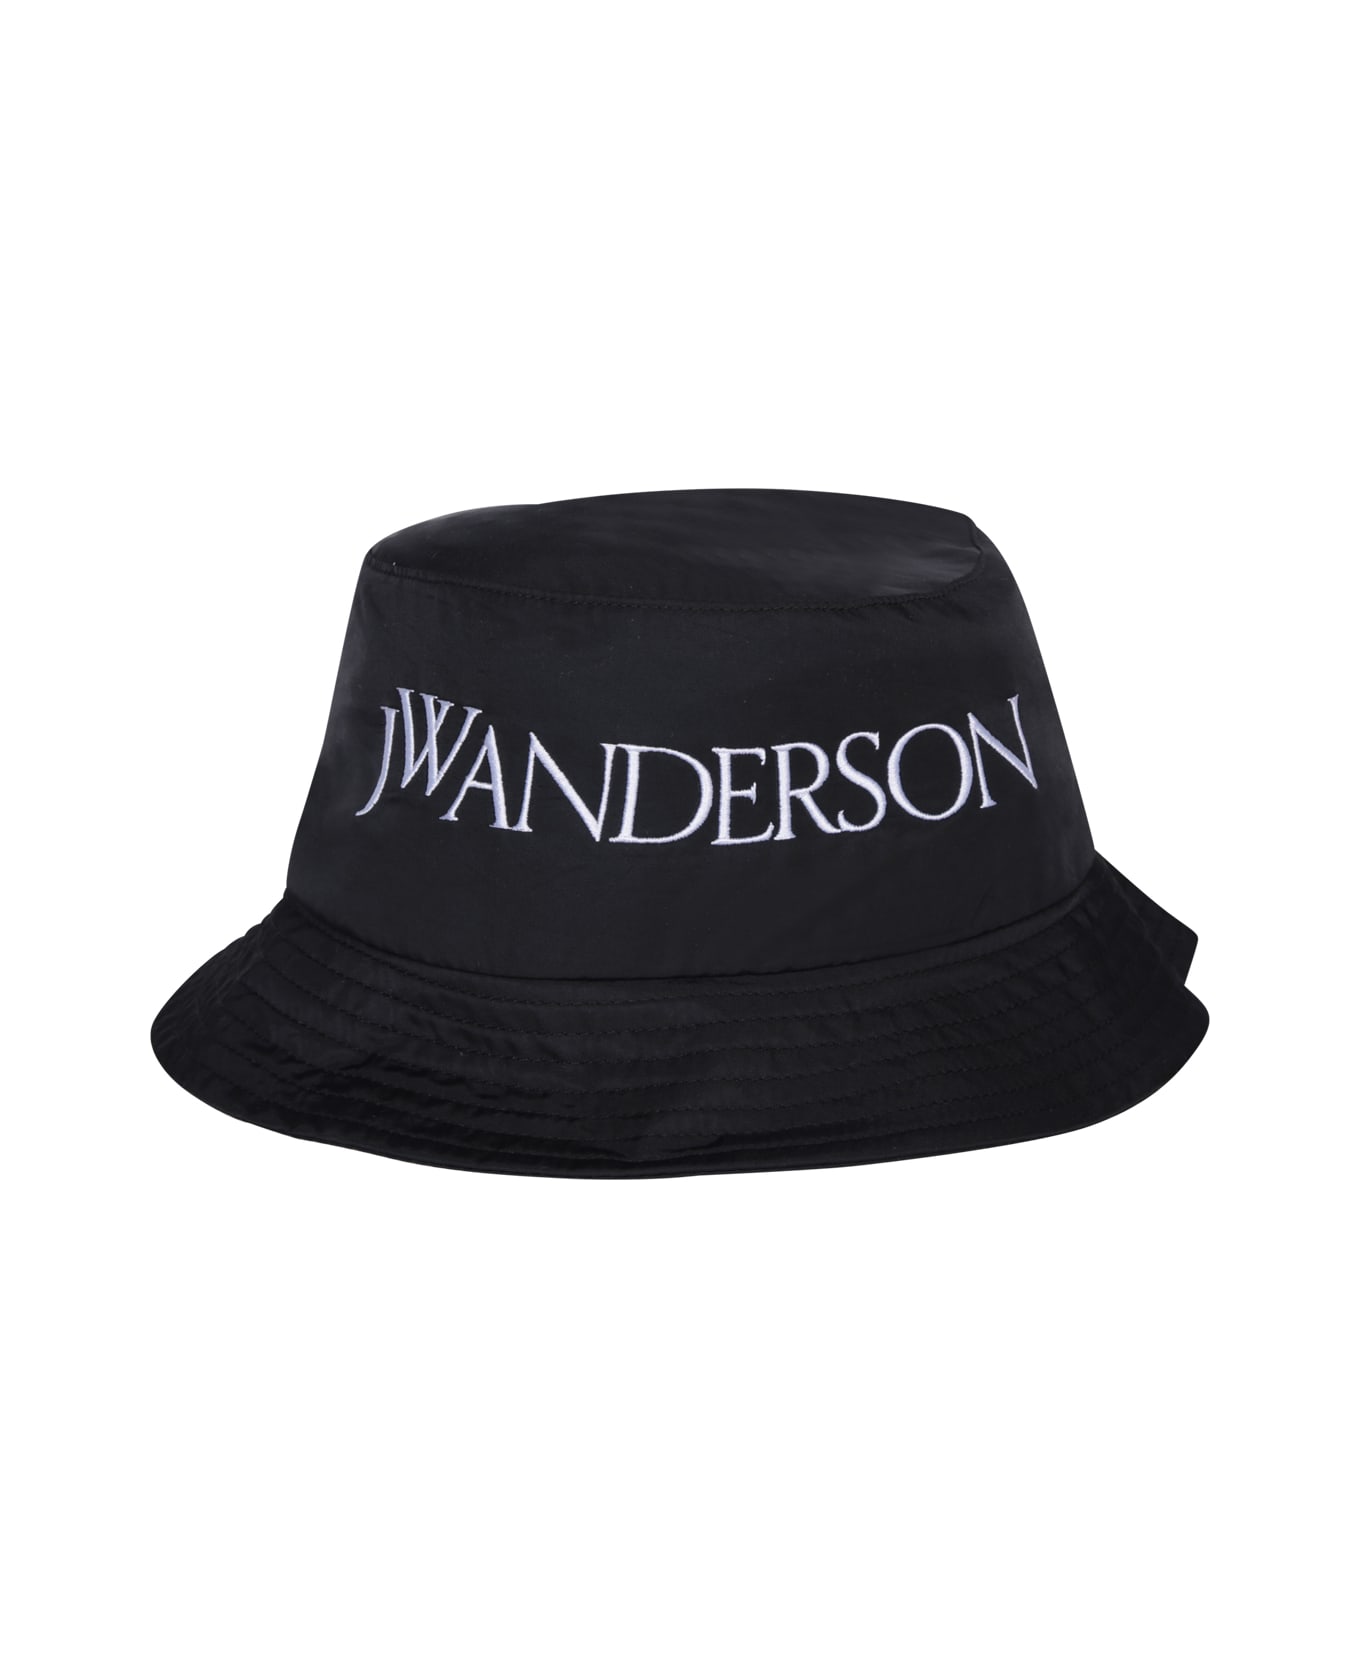 J.W. Anderson Black Bucket Hat - Black 帽子